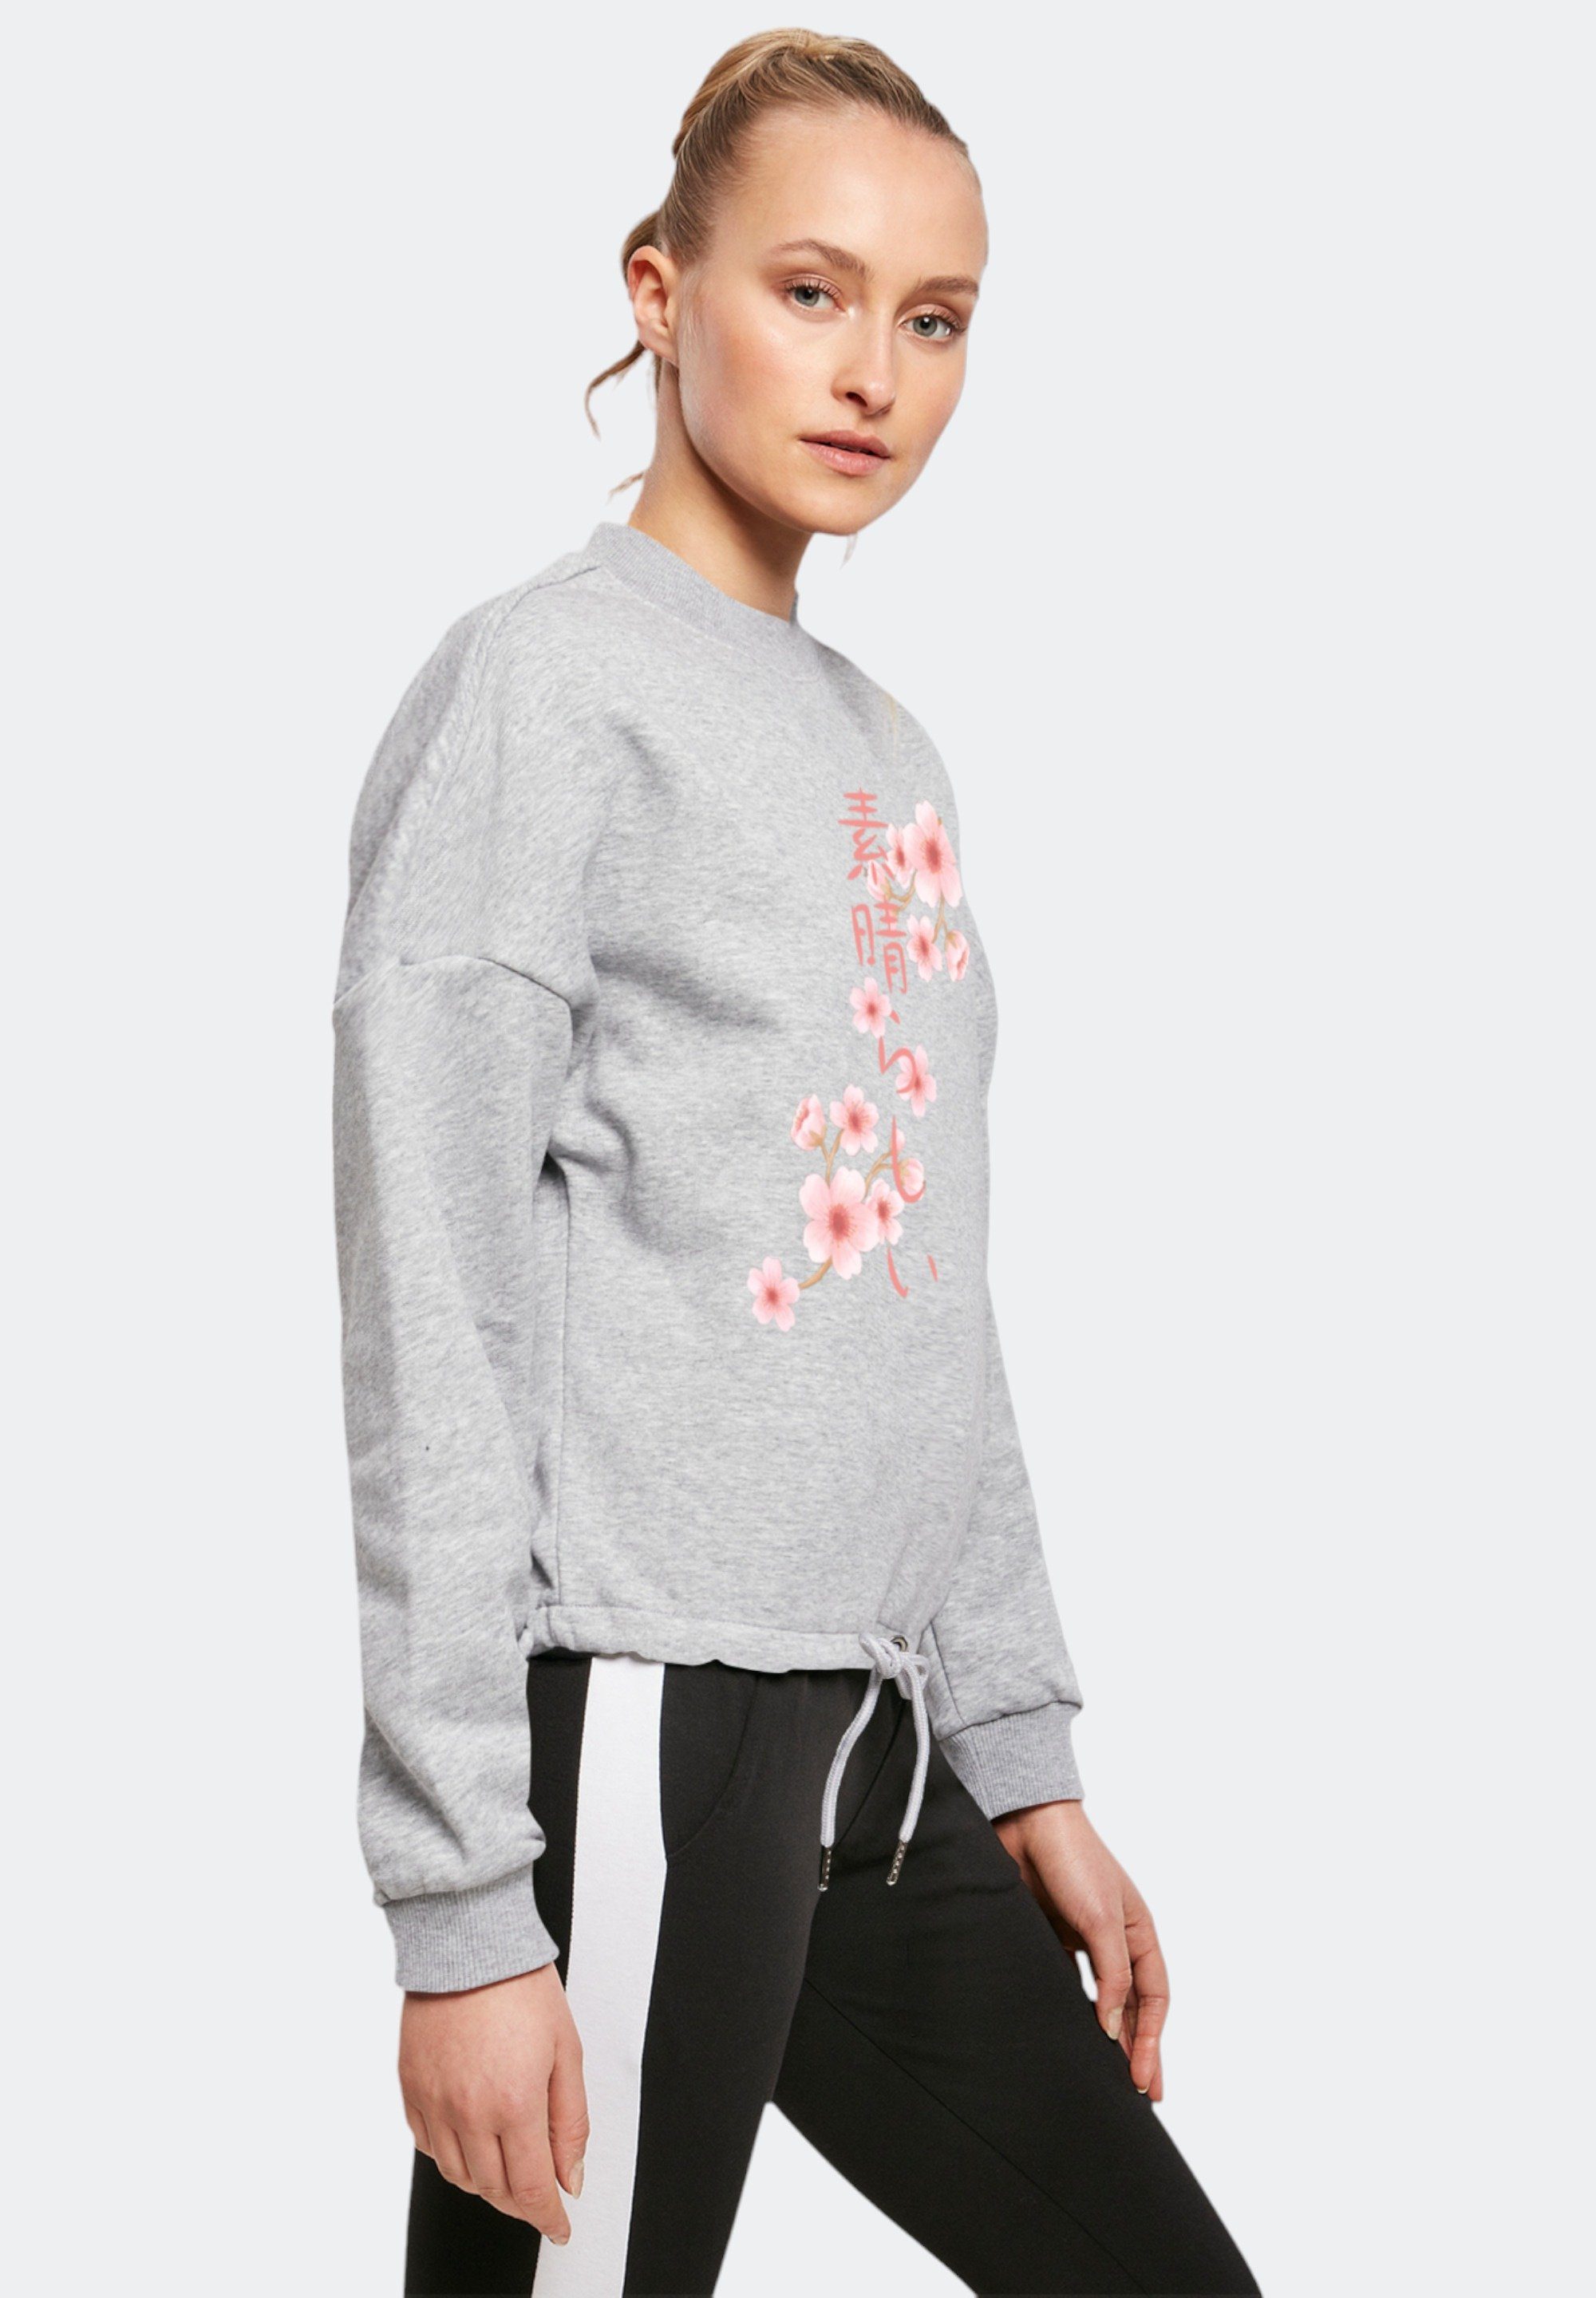 Asien Print Kirschblüten F4NT4STIC Sweatshirt heather grey